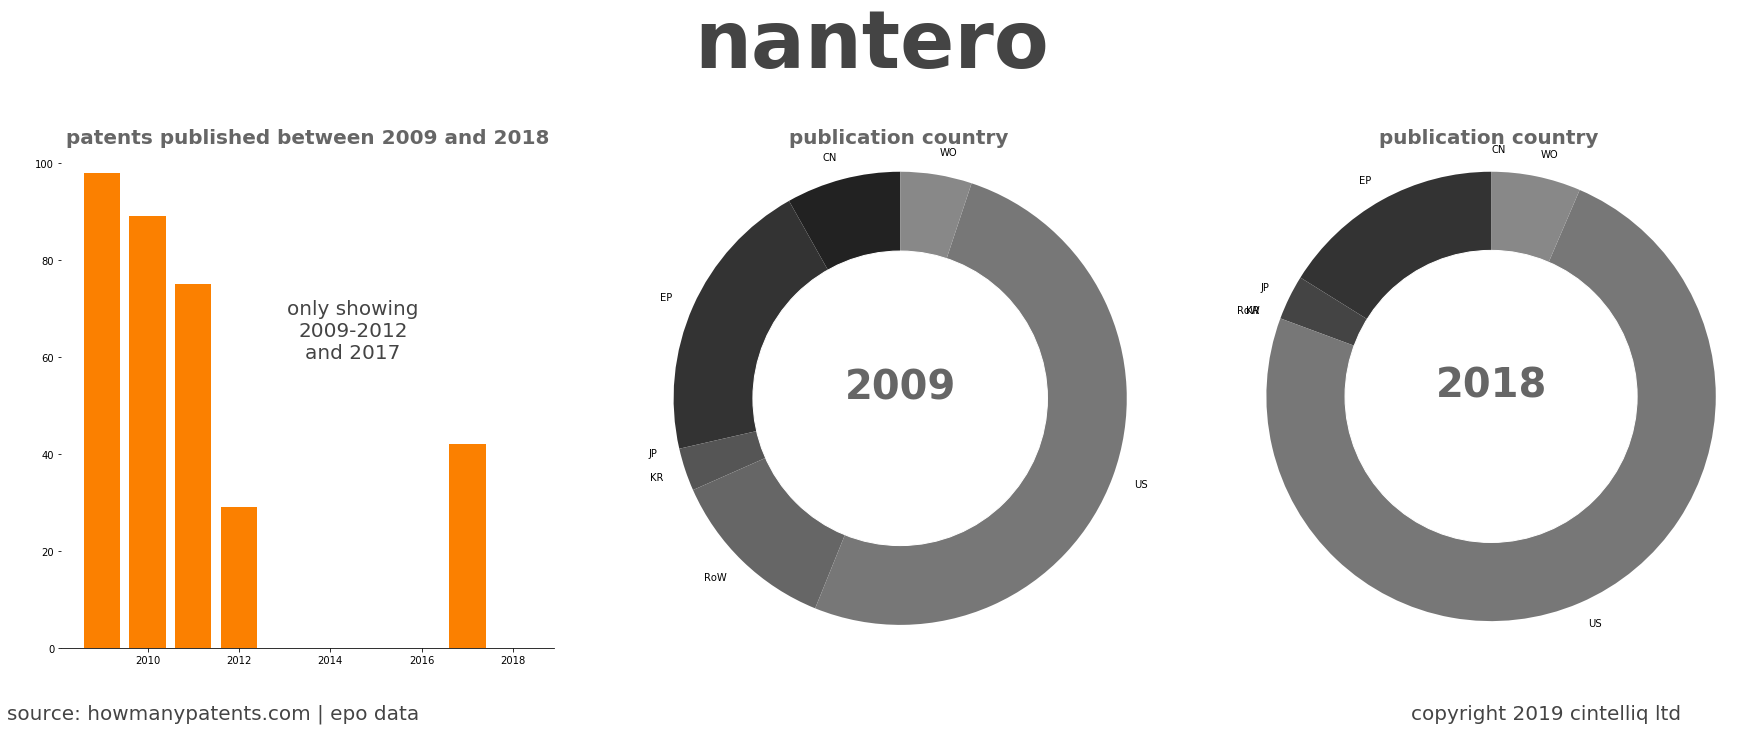 summary of patents for Nantero